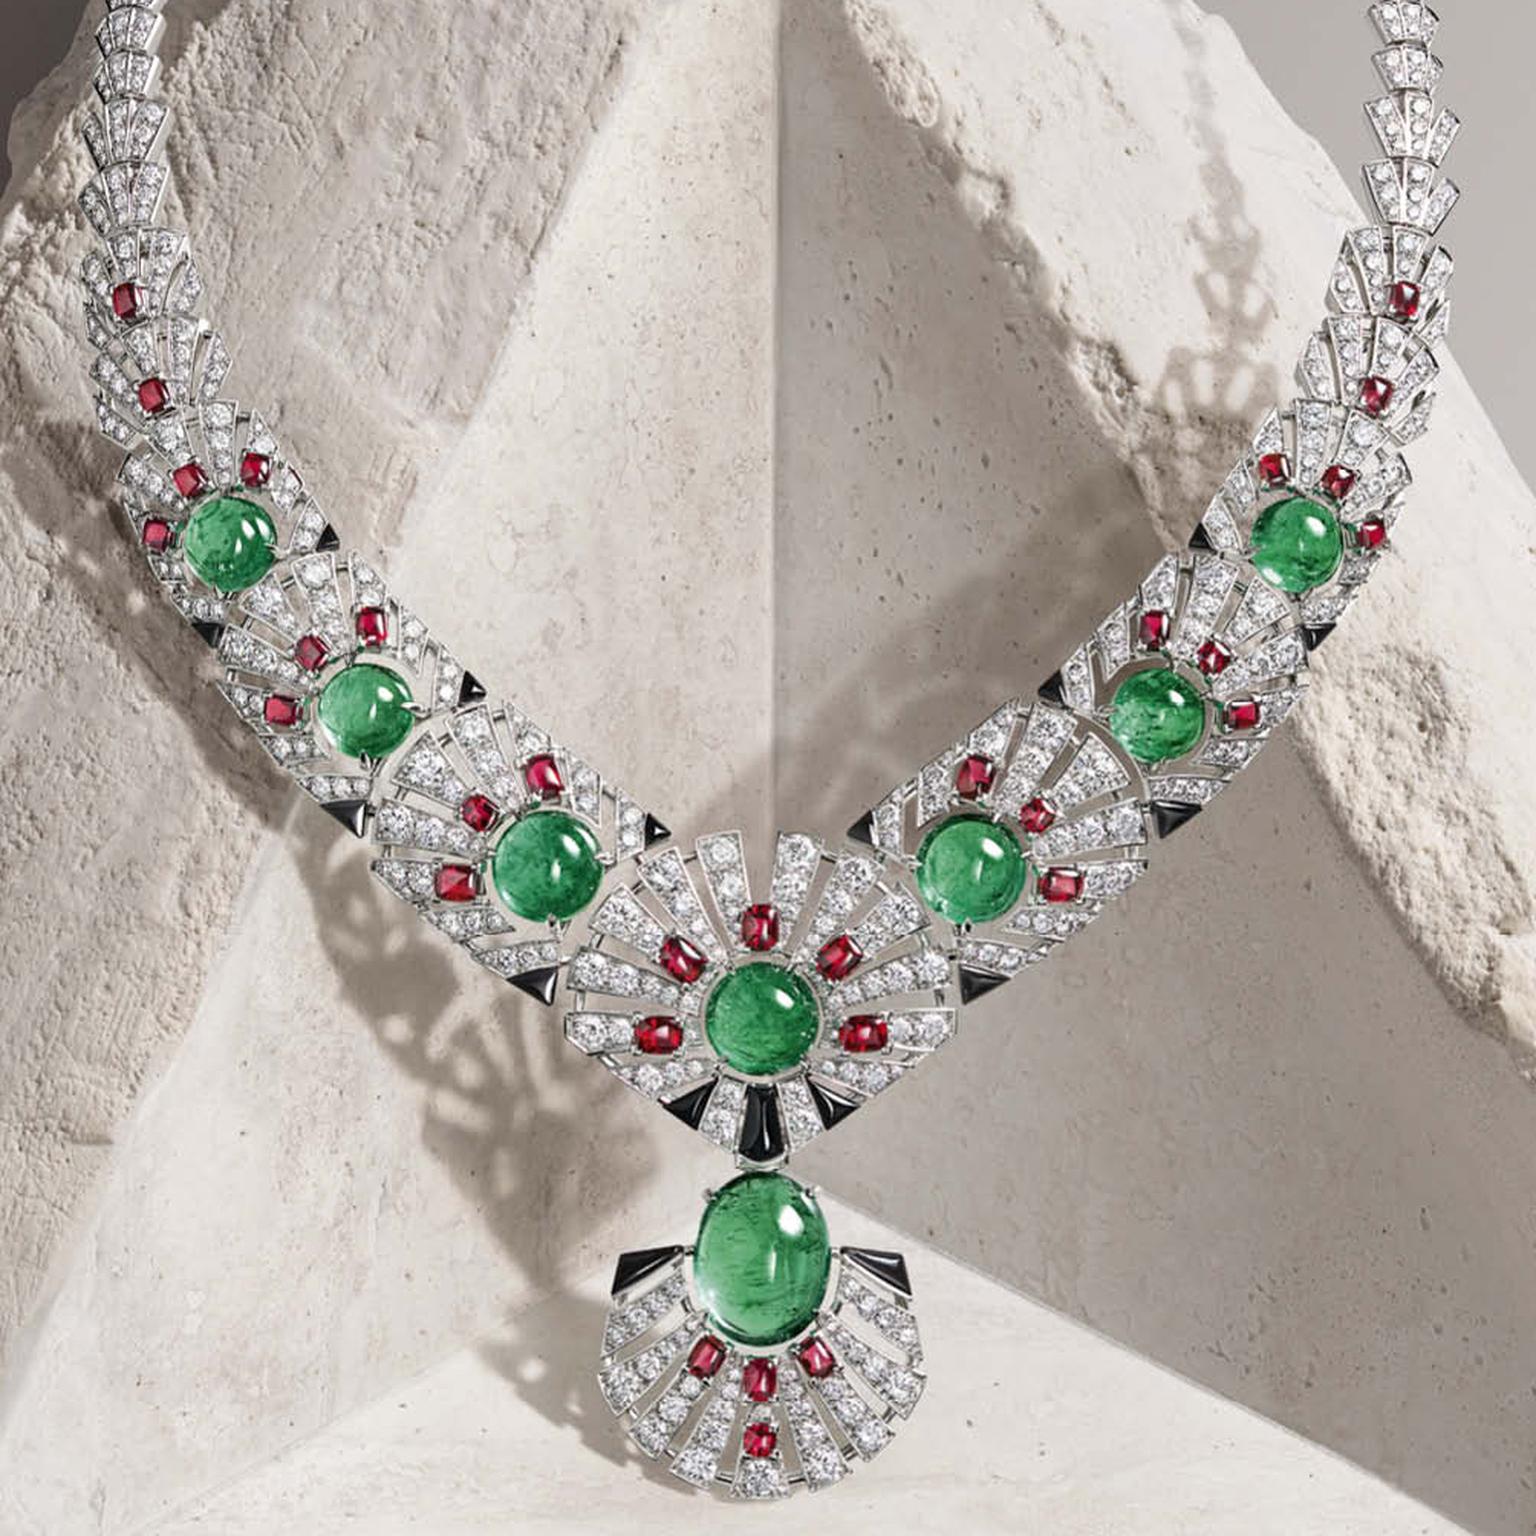 Obi necklace by Cartier, Cartier